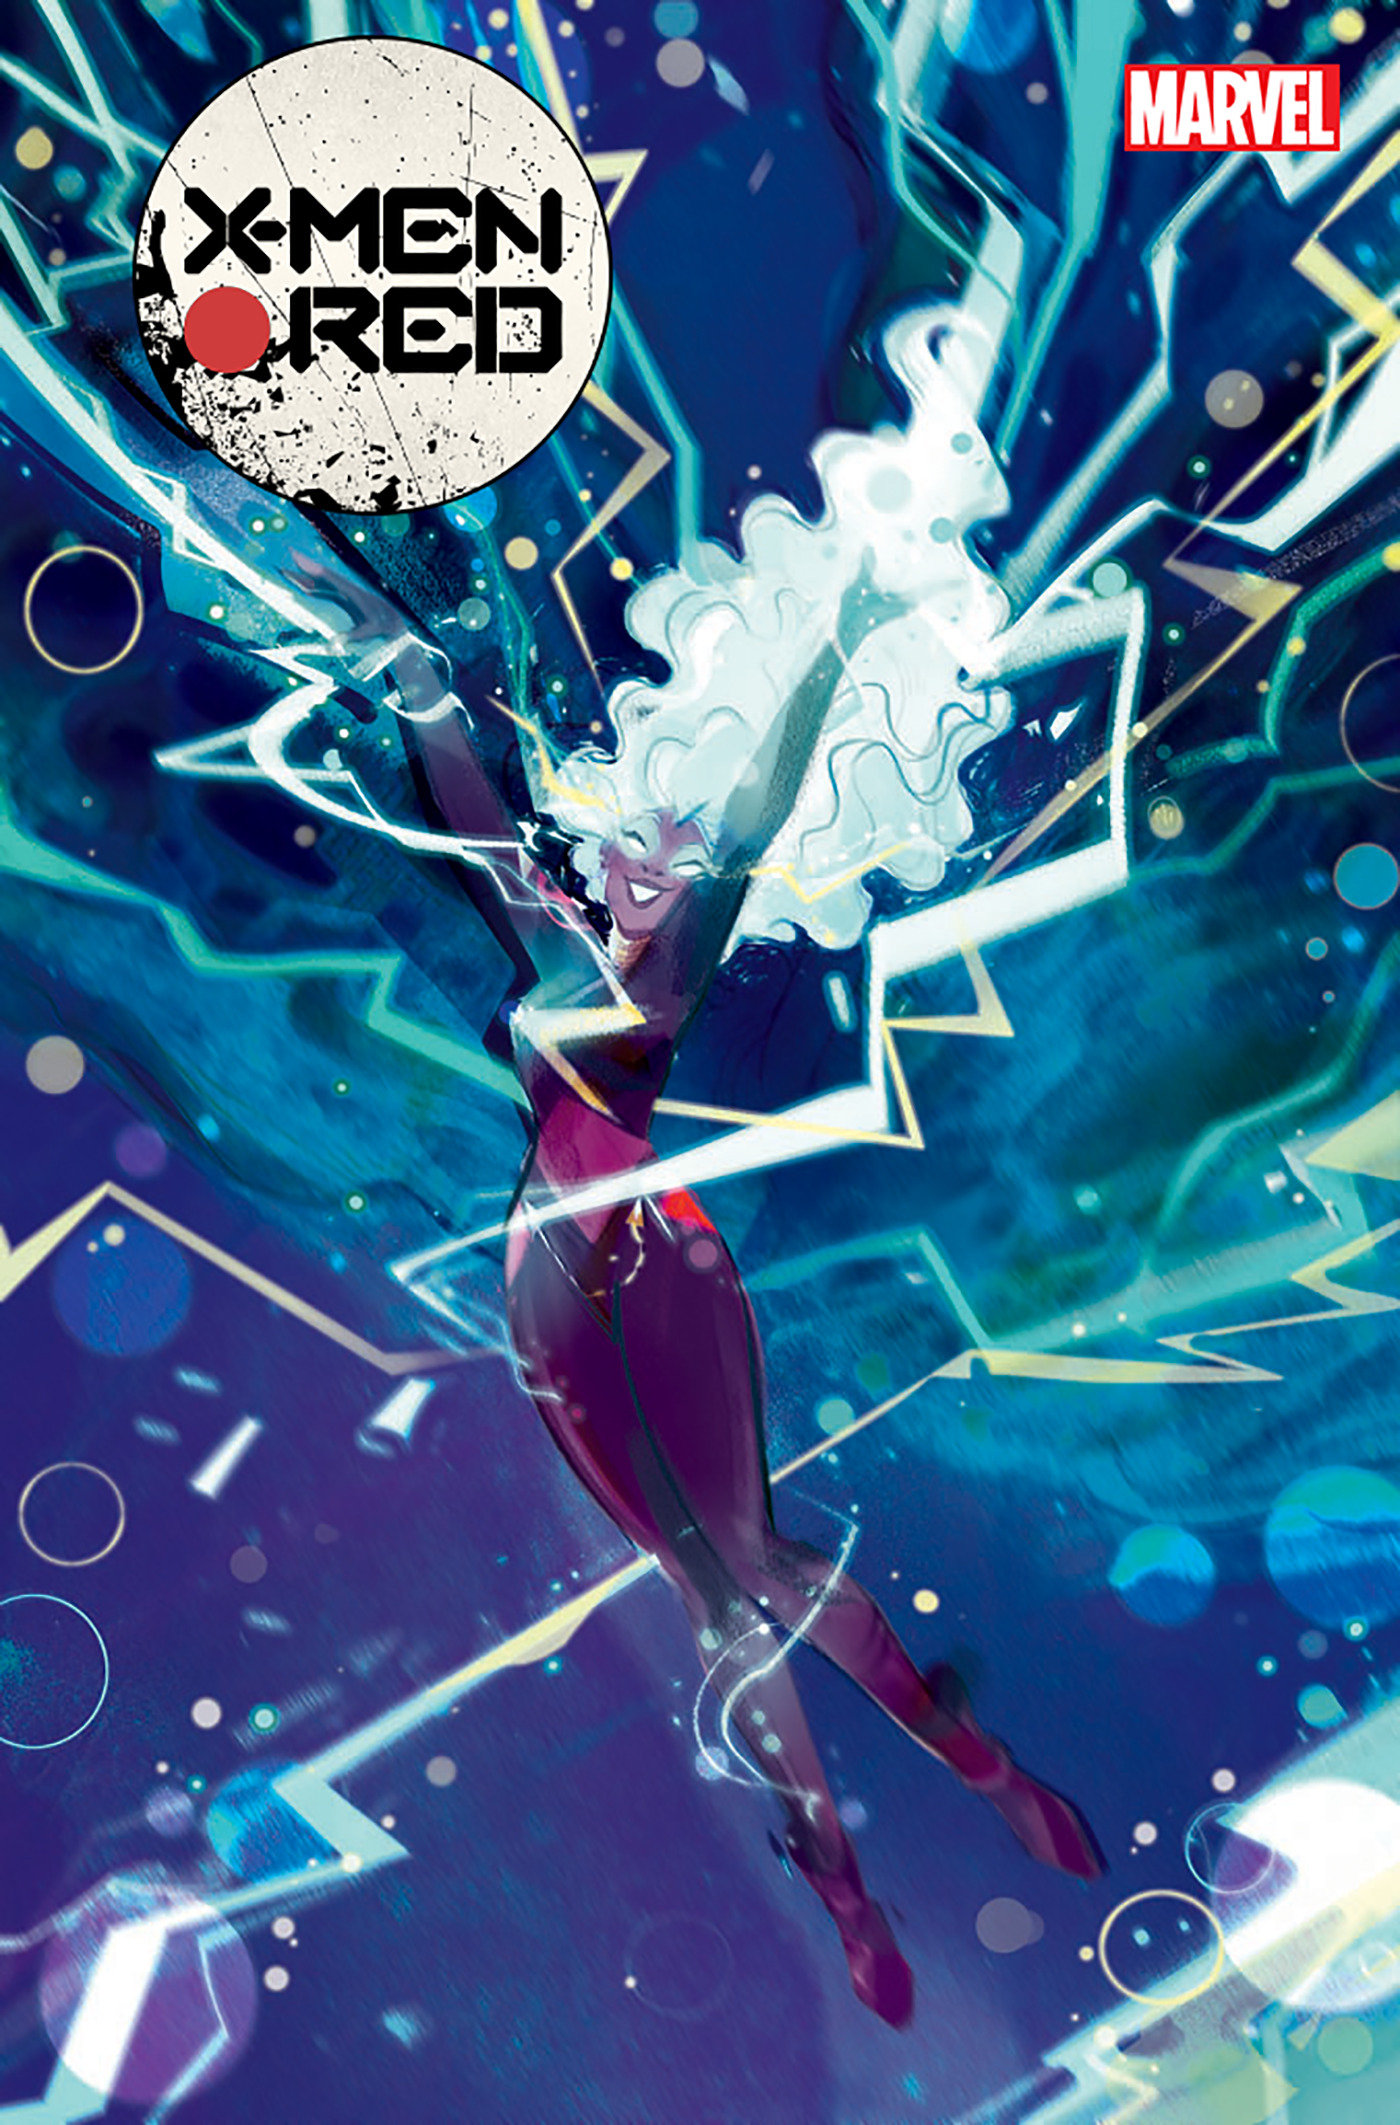 X-Men Red #15 Nicoletta Baldari Variant (Fall of the X-Men)